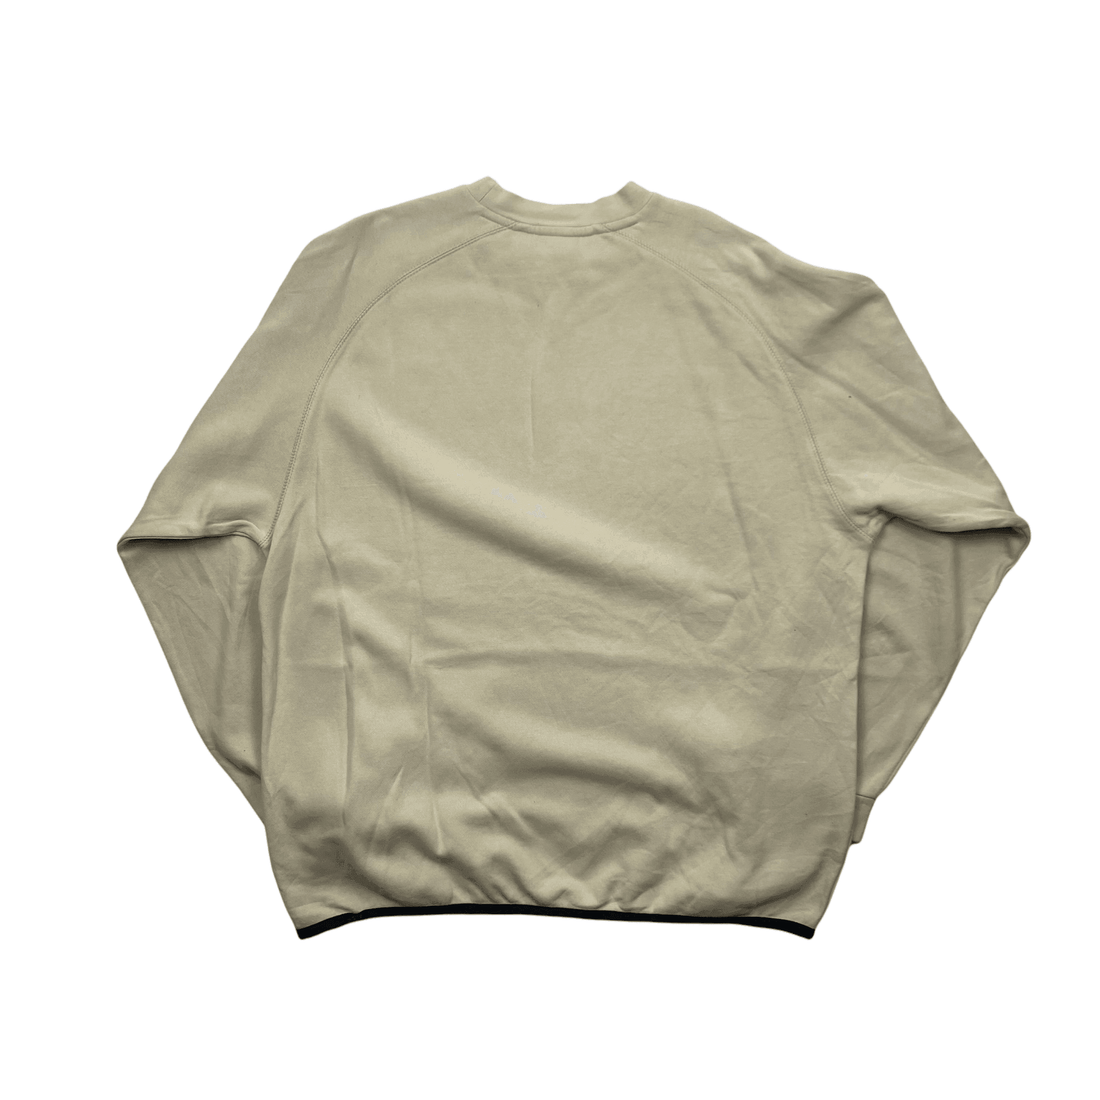 Vintage Cream Nike Sweatshirt - Medium (Recommended Size - Large) - The Streetwear Studio